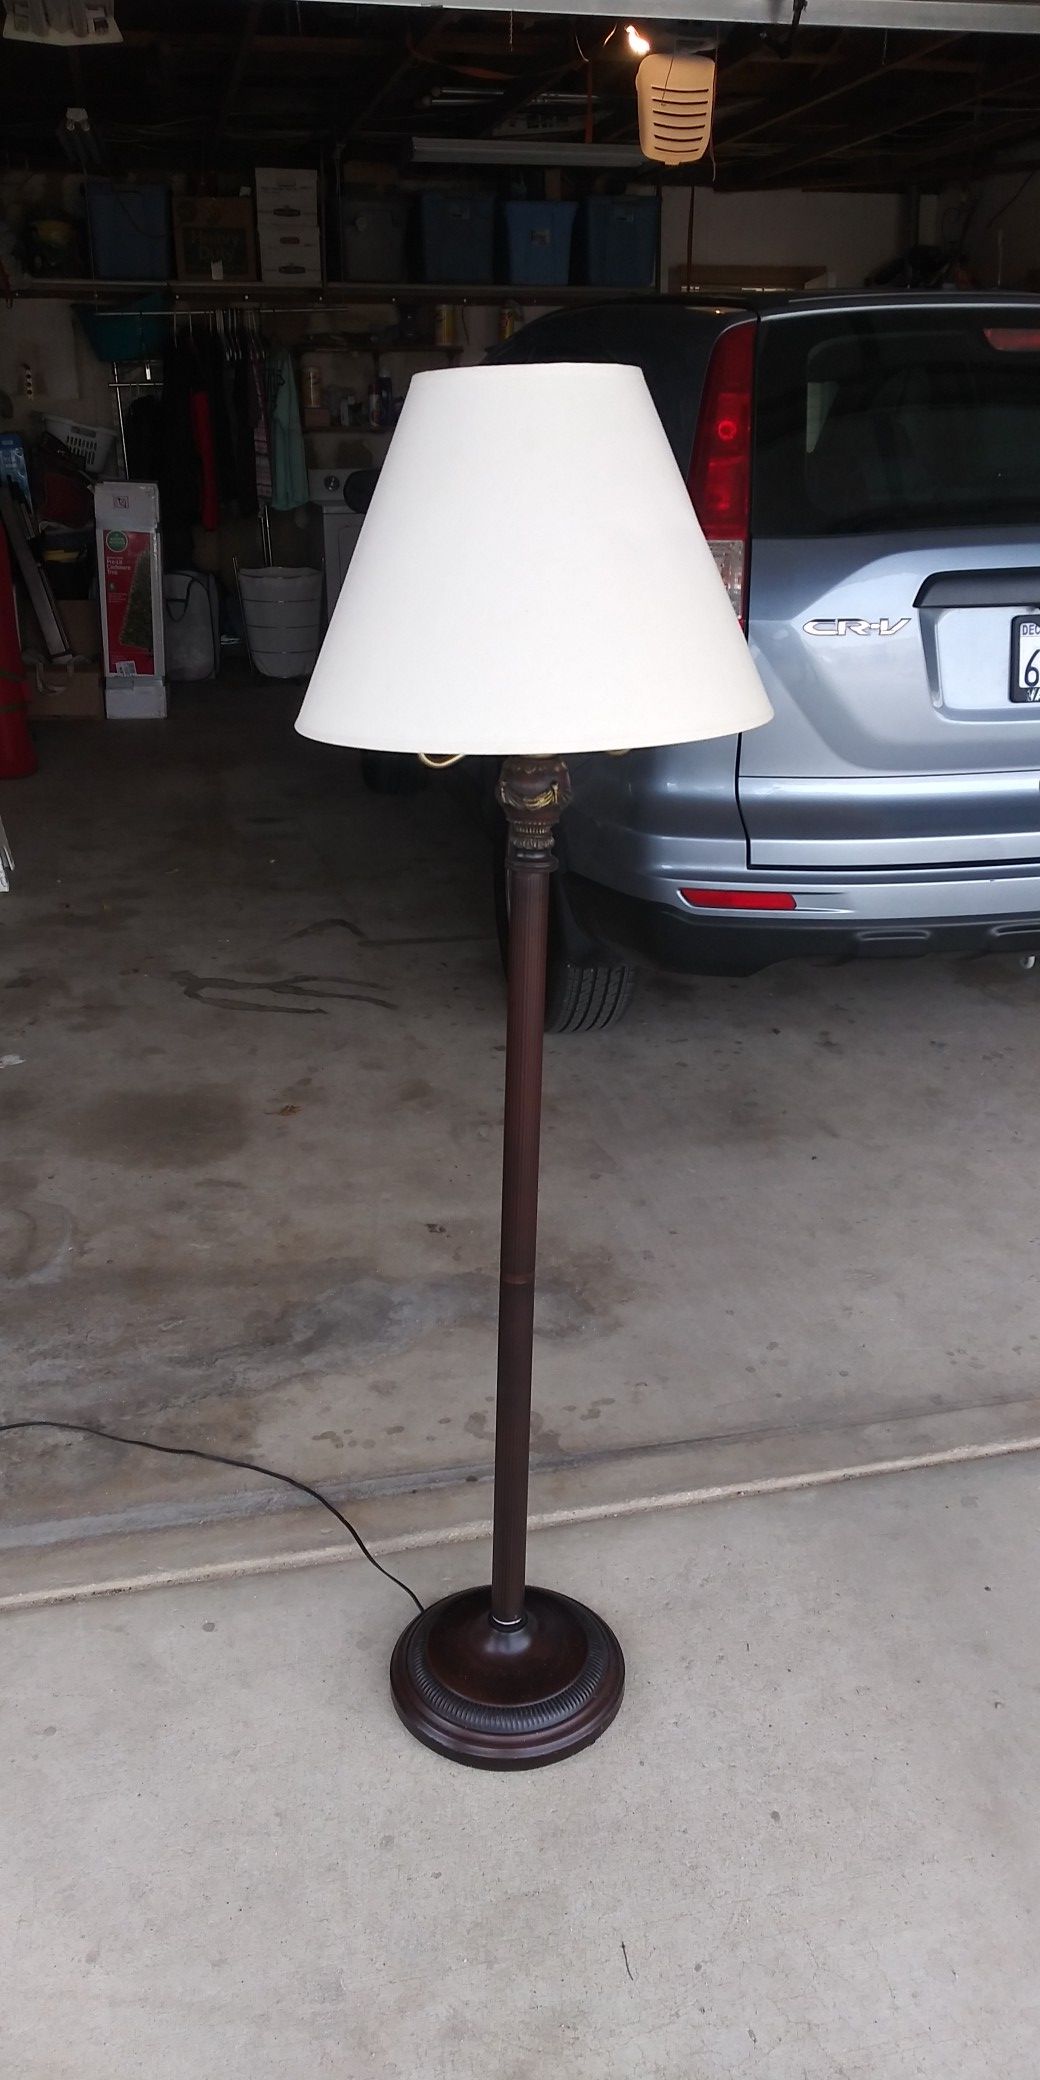 Very nice lamp